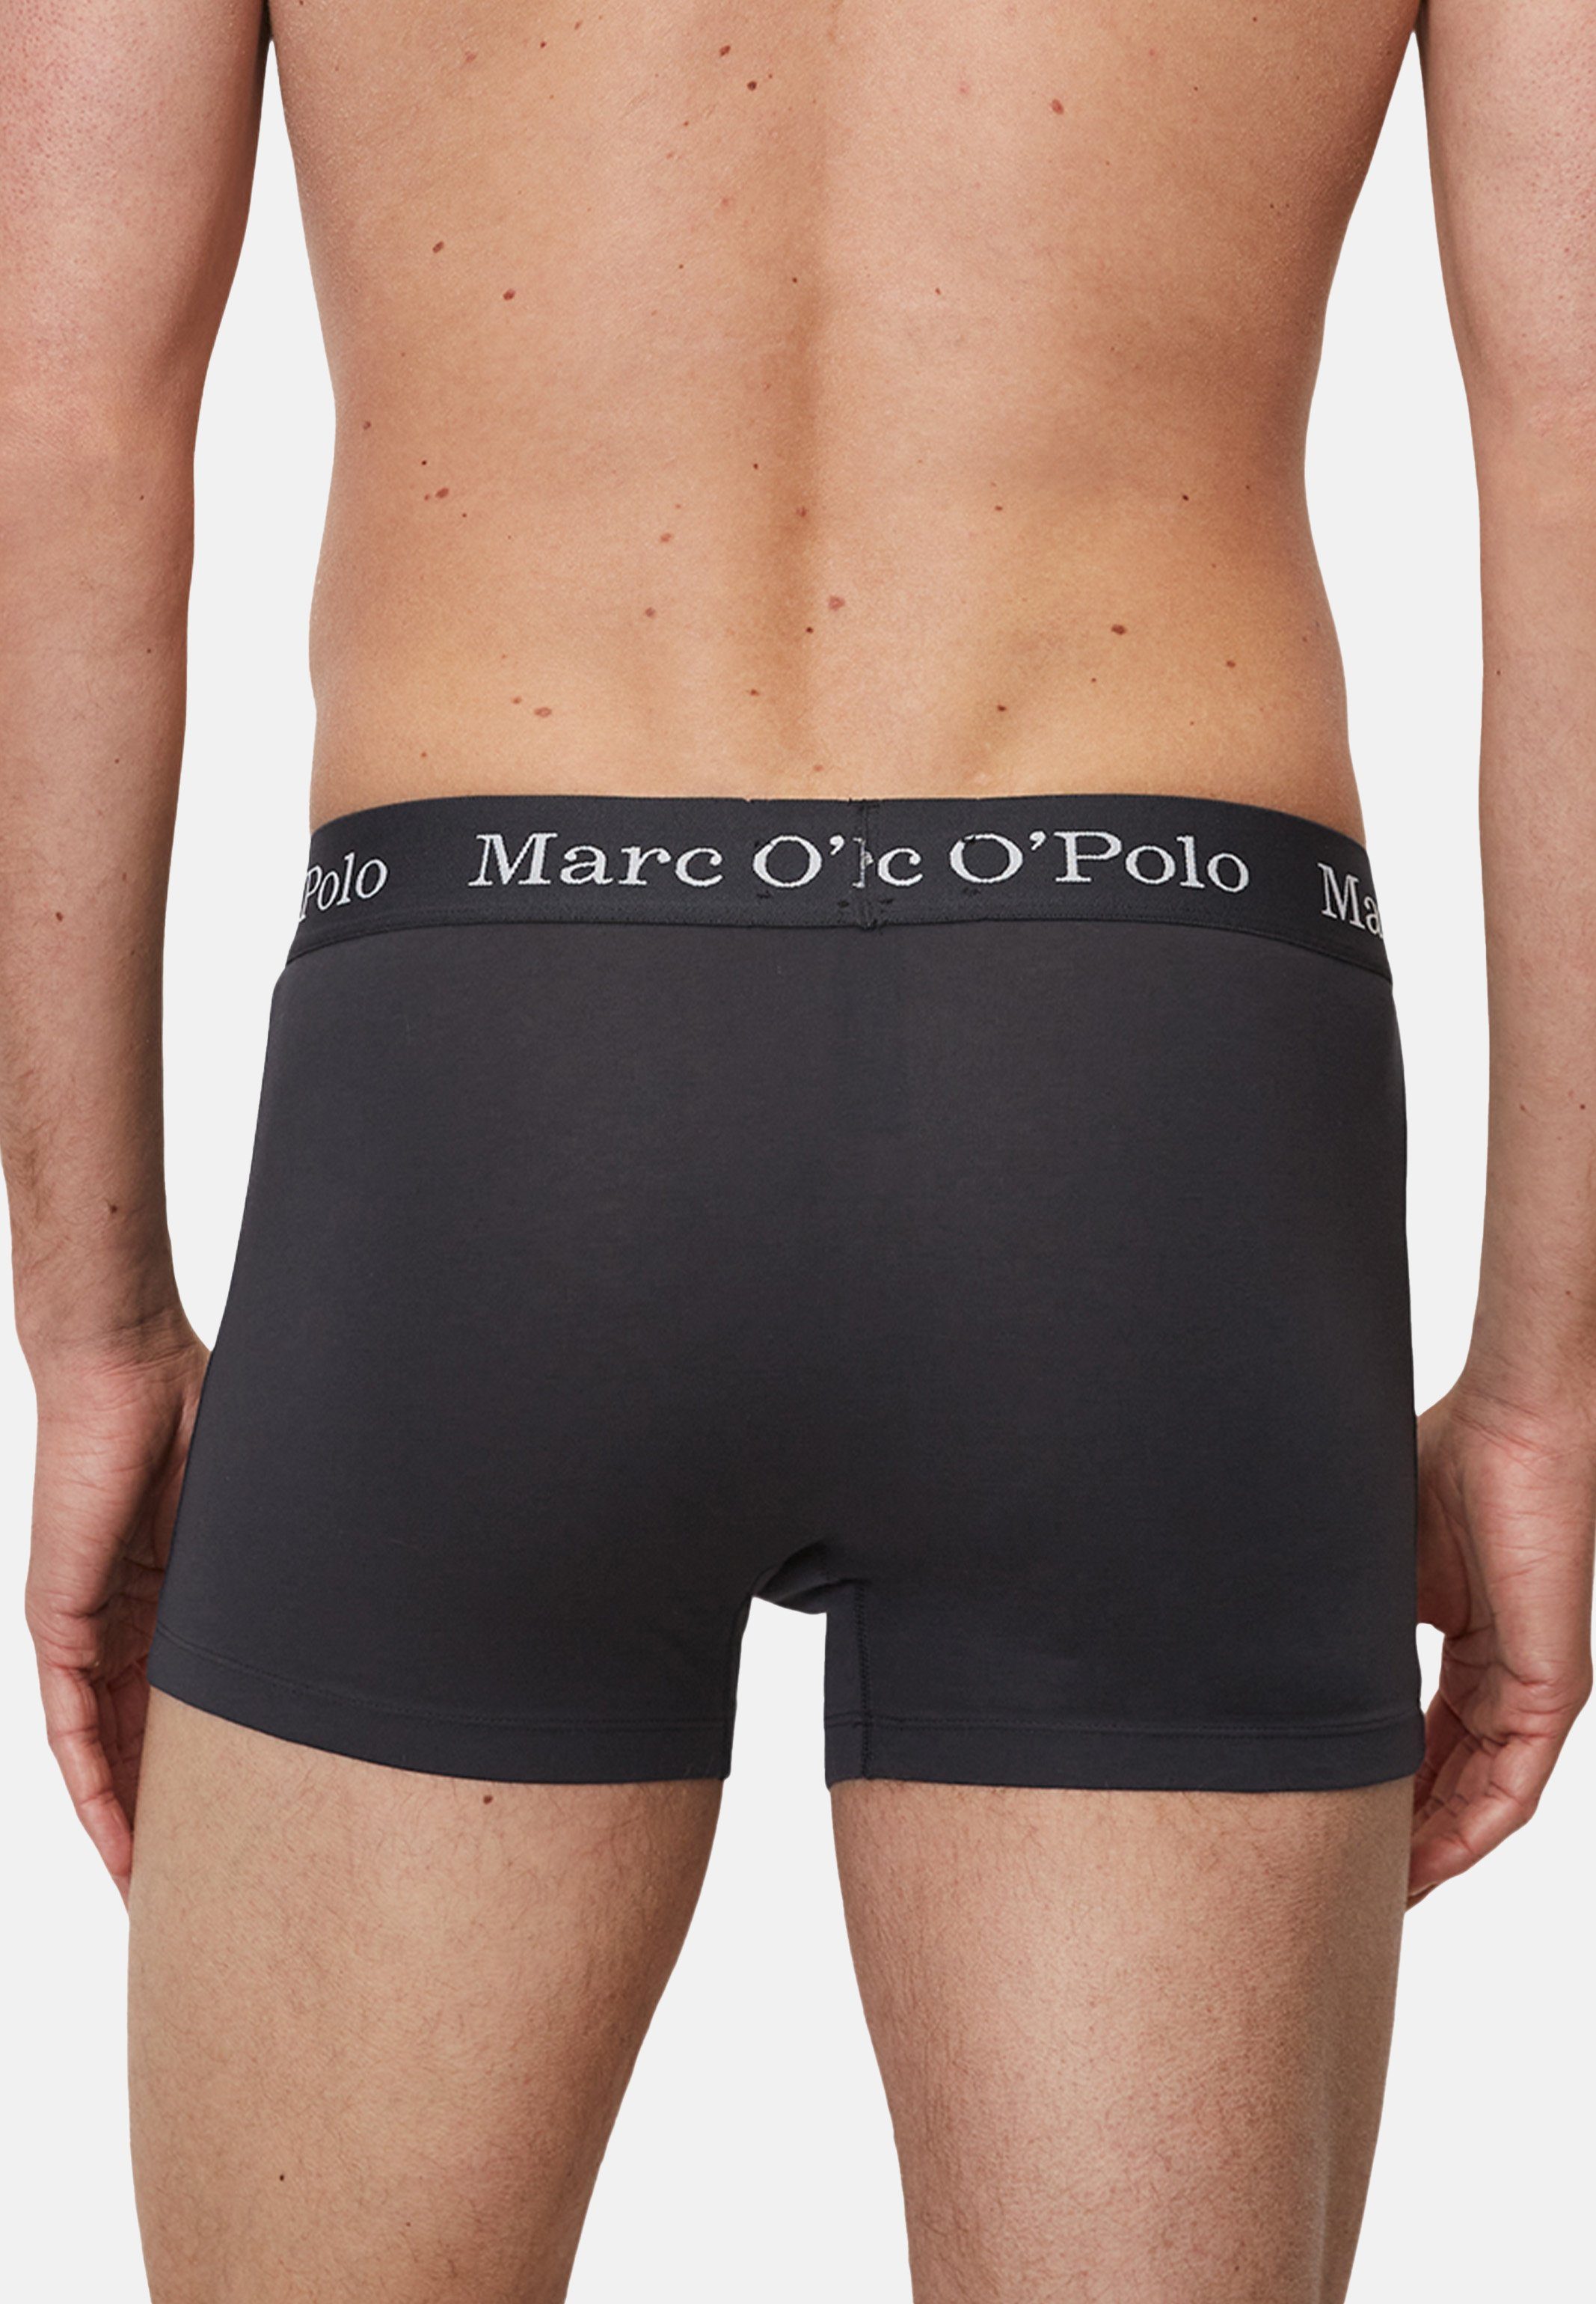 Ohne / 3er Elements - O'Polo Short Pant Marc Cotton Eingriff Melange 3-St) Organic - Retro Long - Black/Navy/Grey Boxer Baumwolle Pack (Spar-Set,